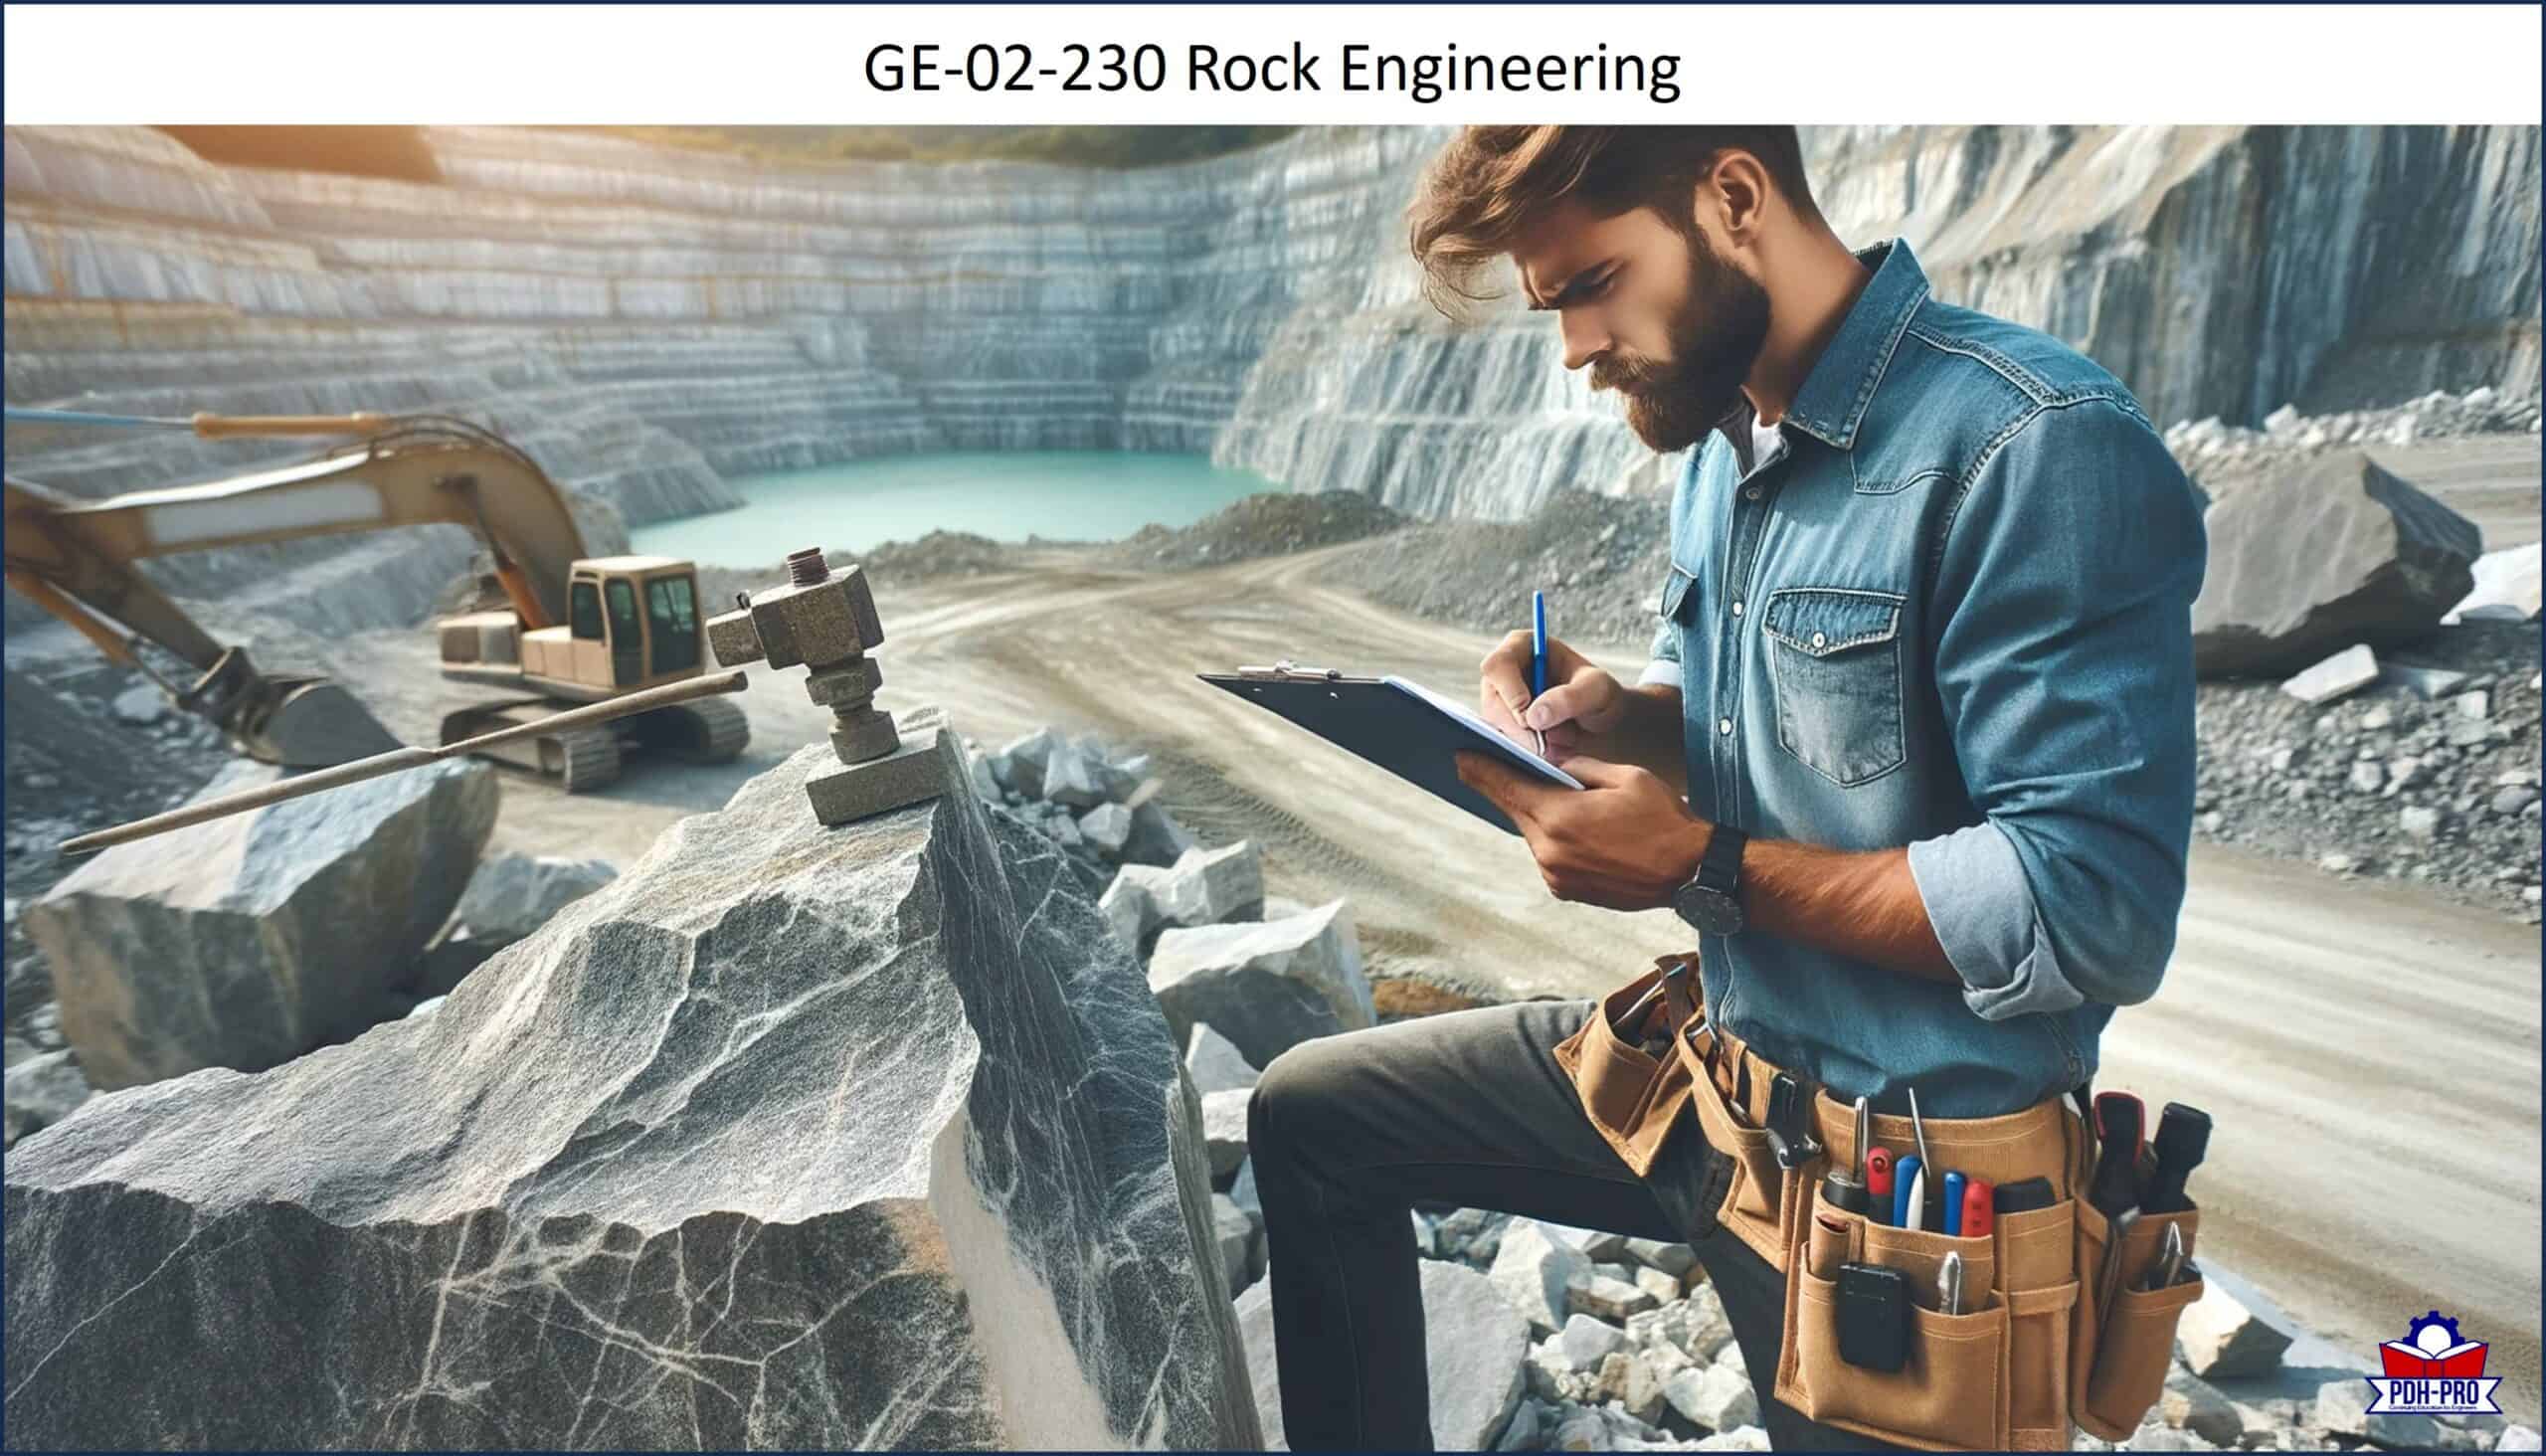 Rock Engineering